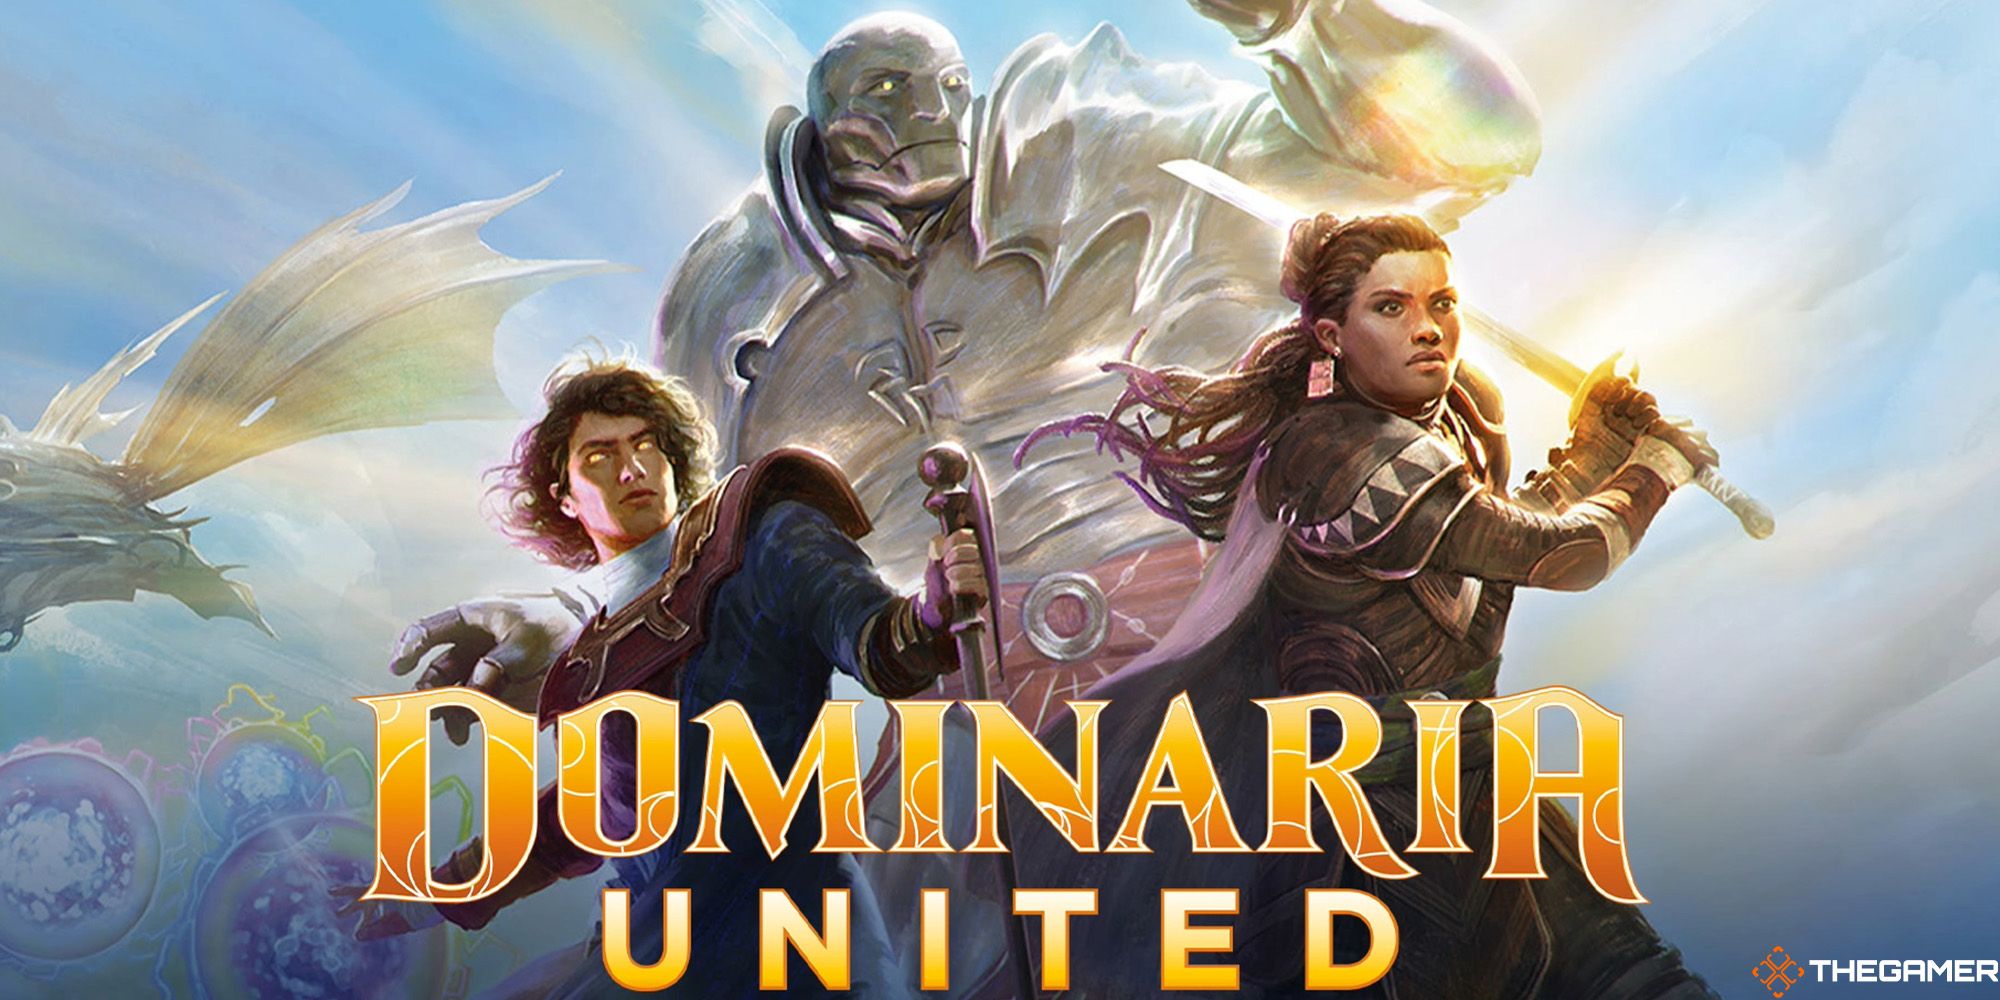 Dominaria United Key Art via Wizards of the Coast